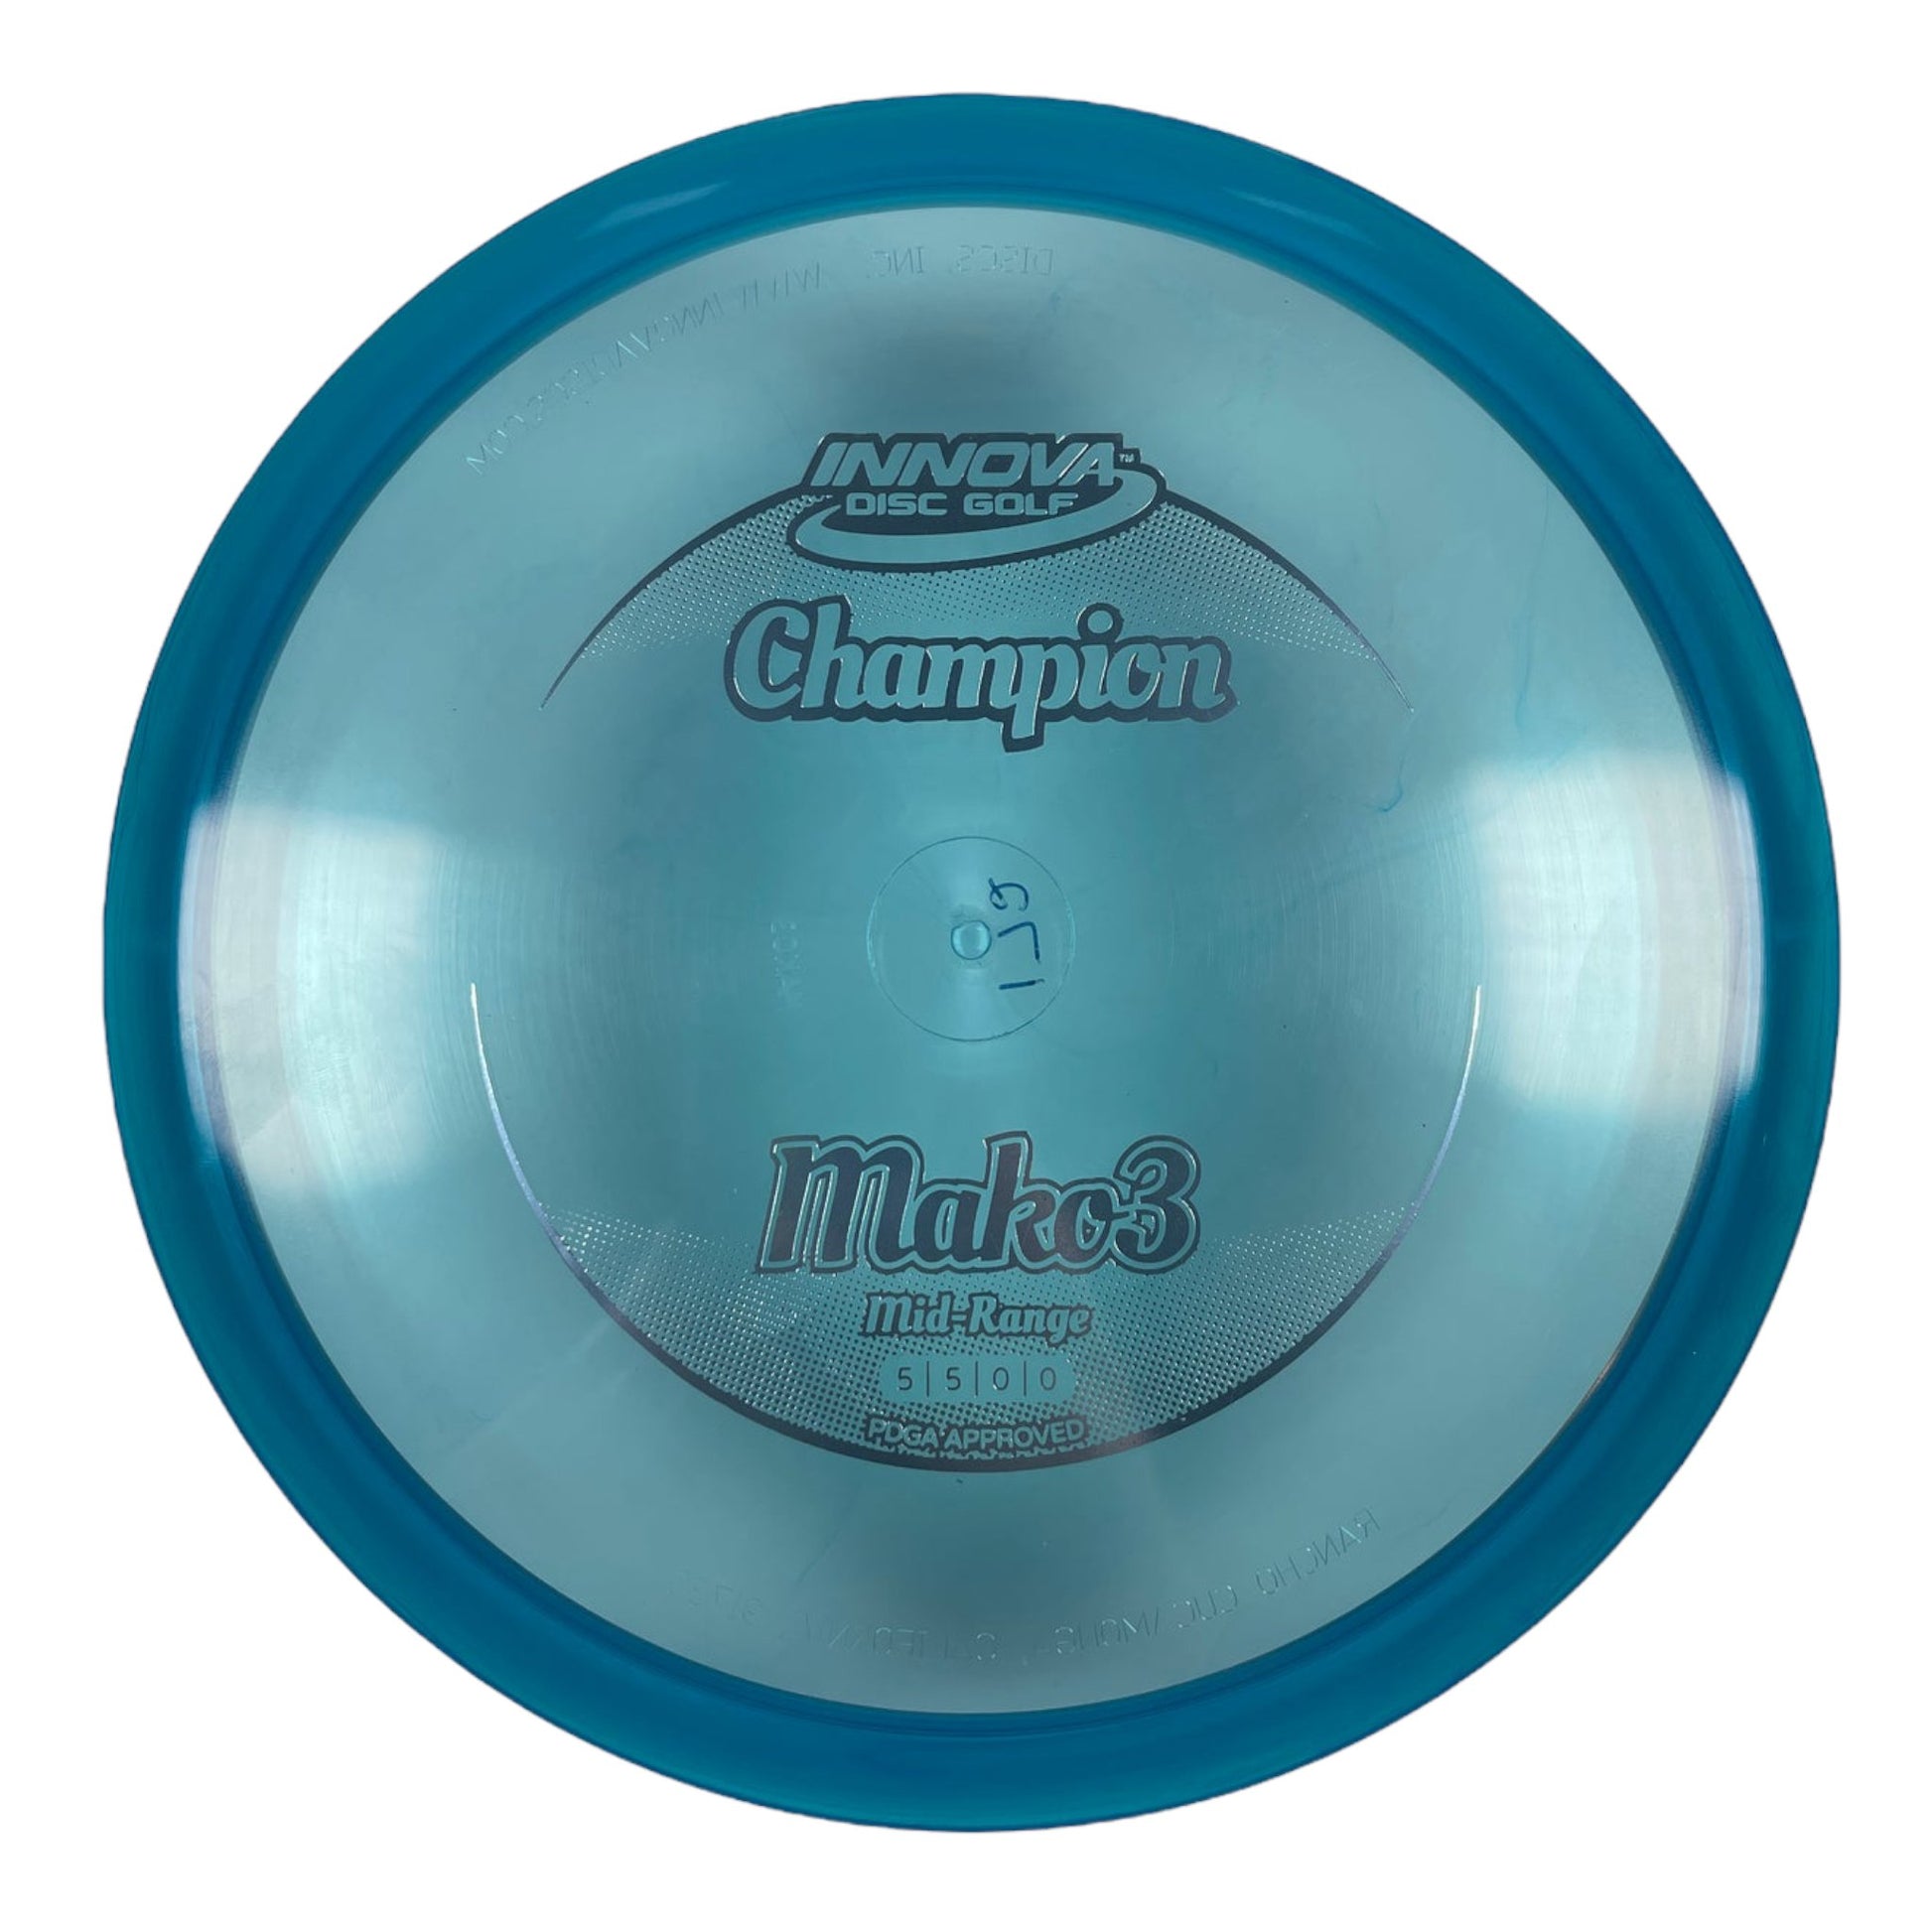 Innova Champion Discs Mako3 | Champion | Blue/Silver 172g Disc Golf